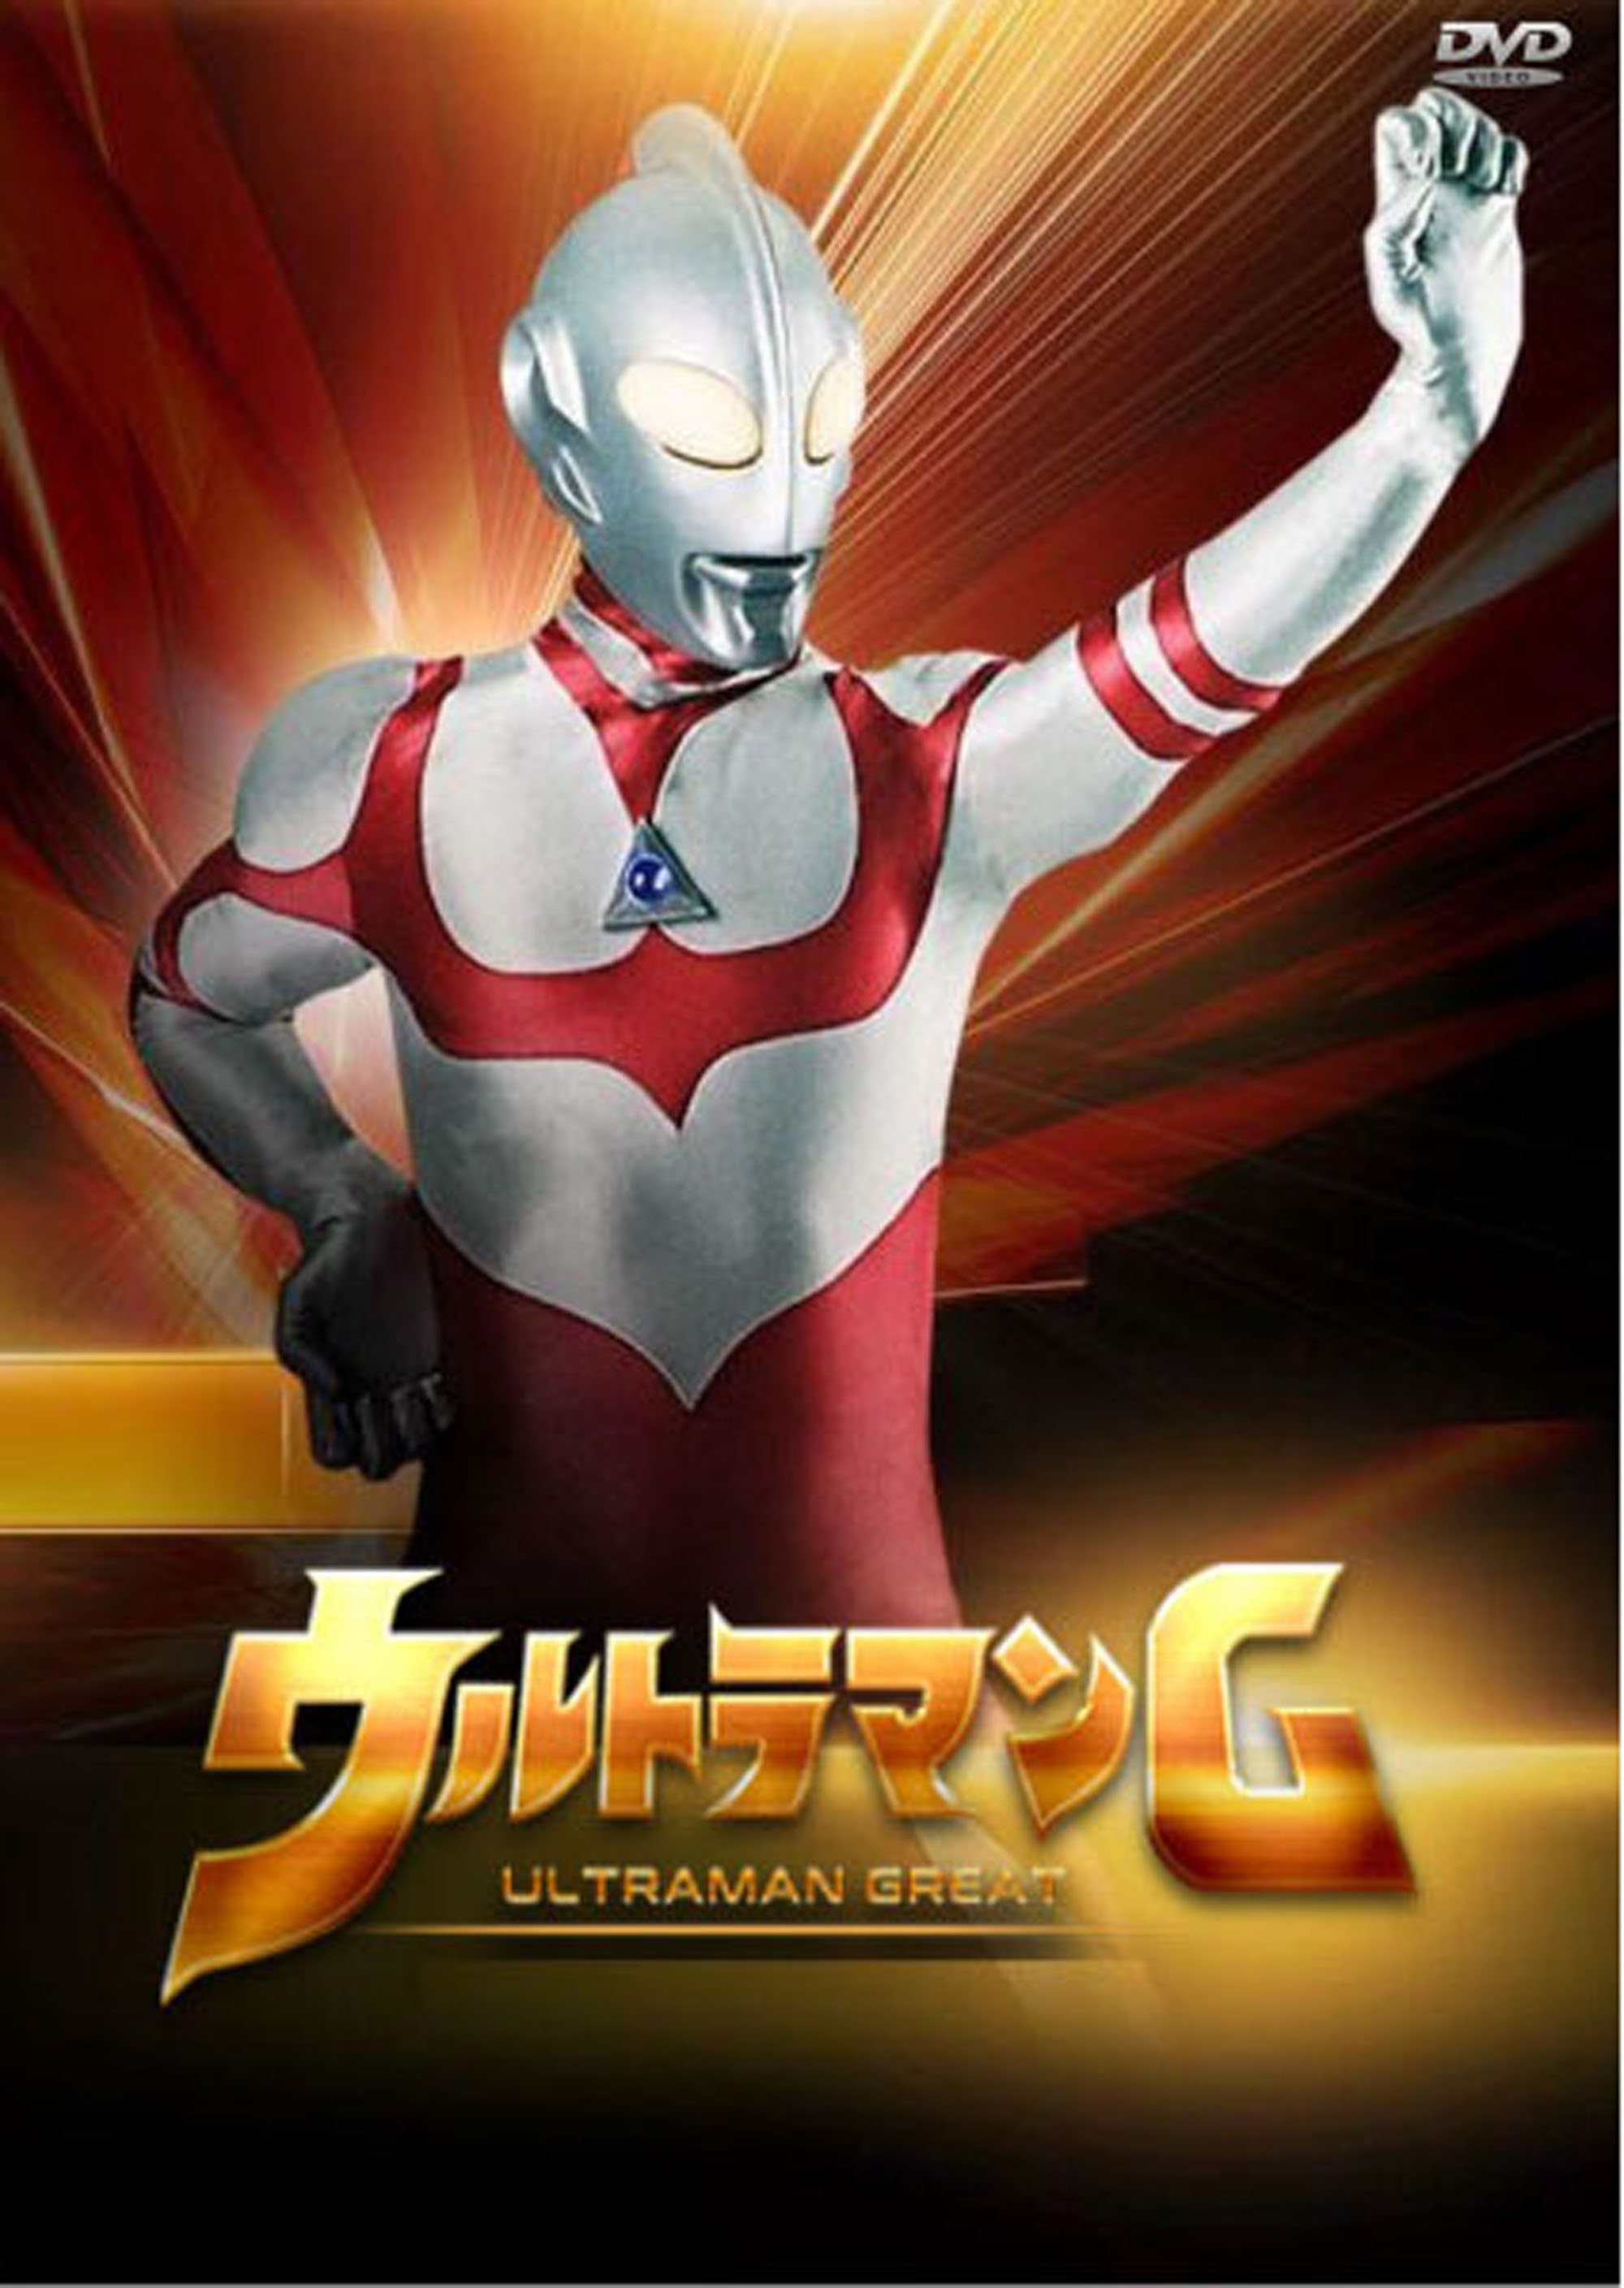 Ultraman Great (1990) ウルトラマンG Complete Japanese DVD Series